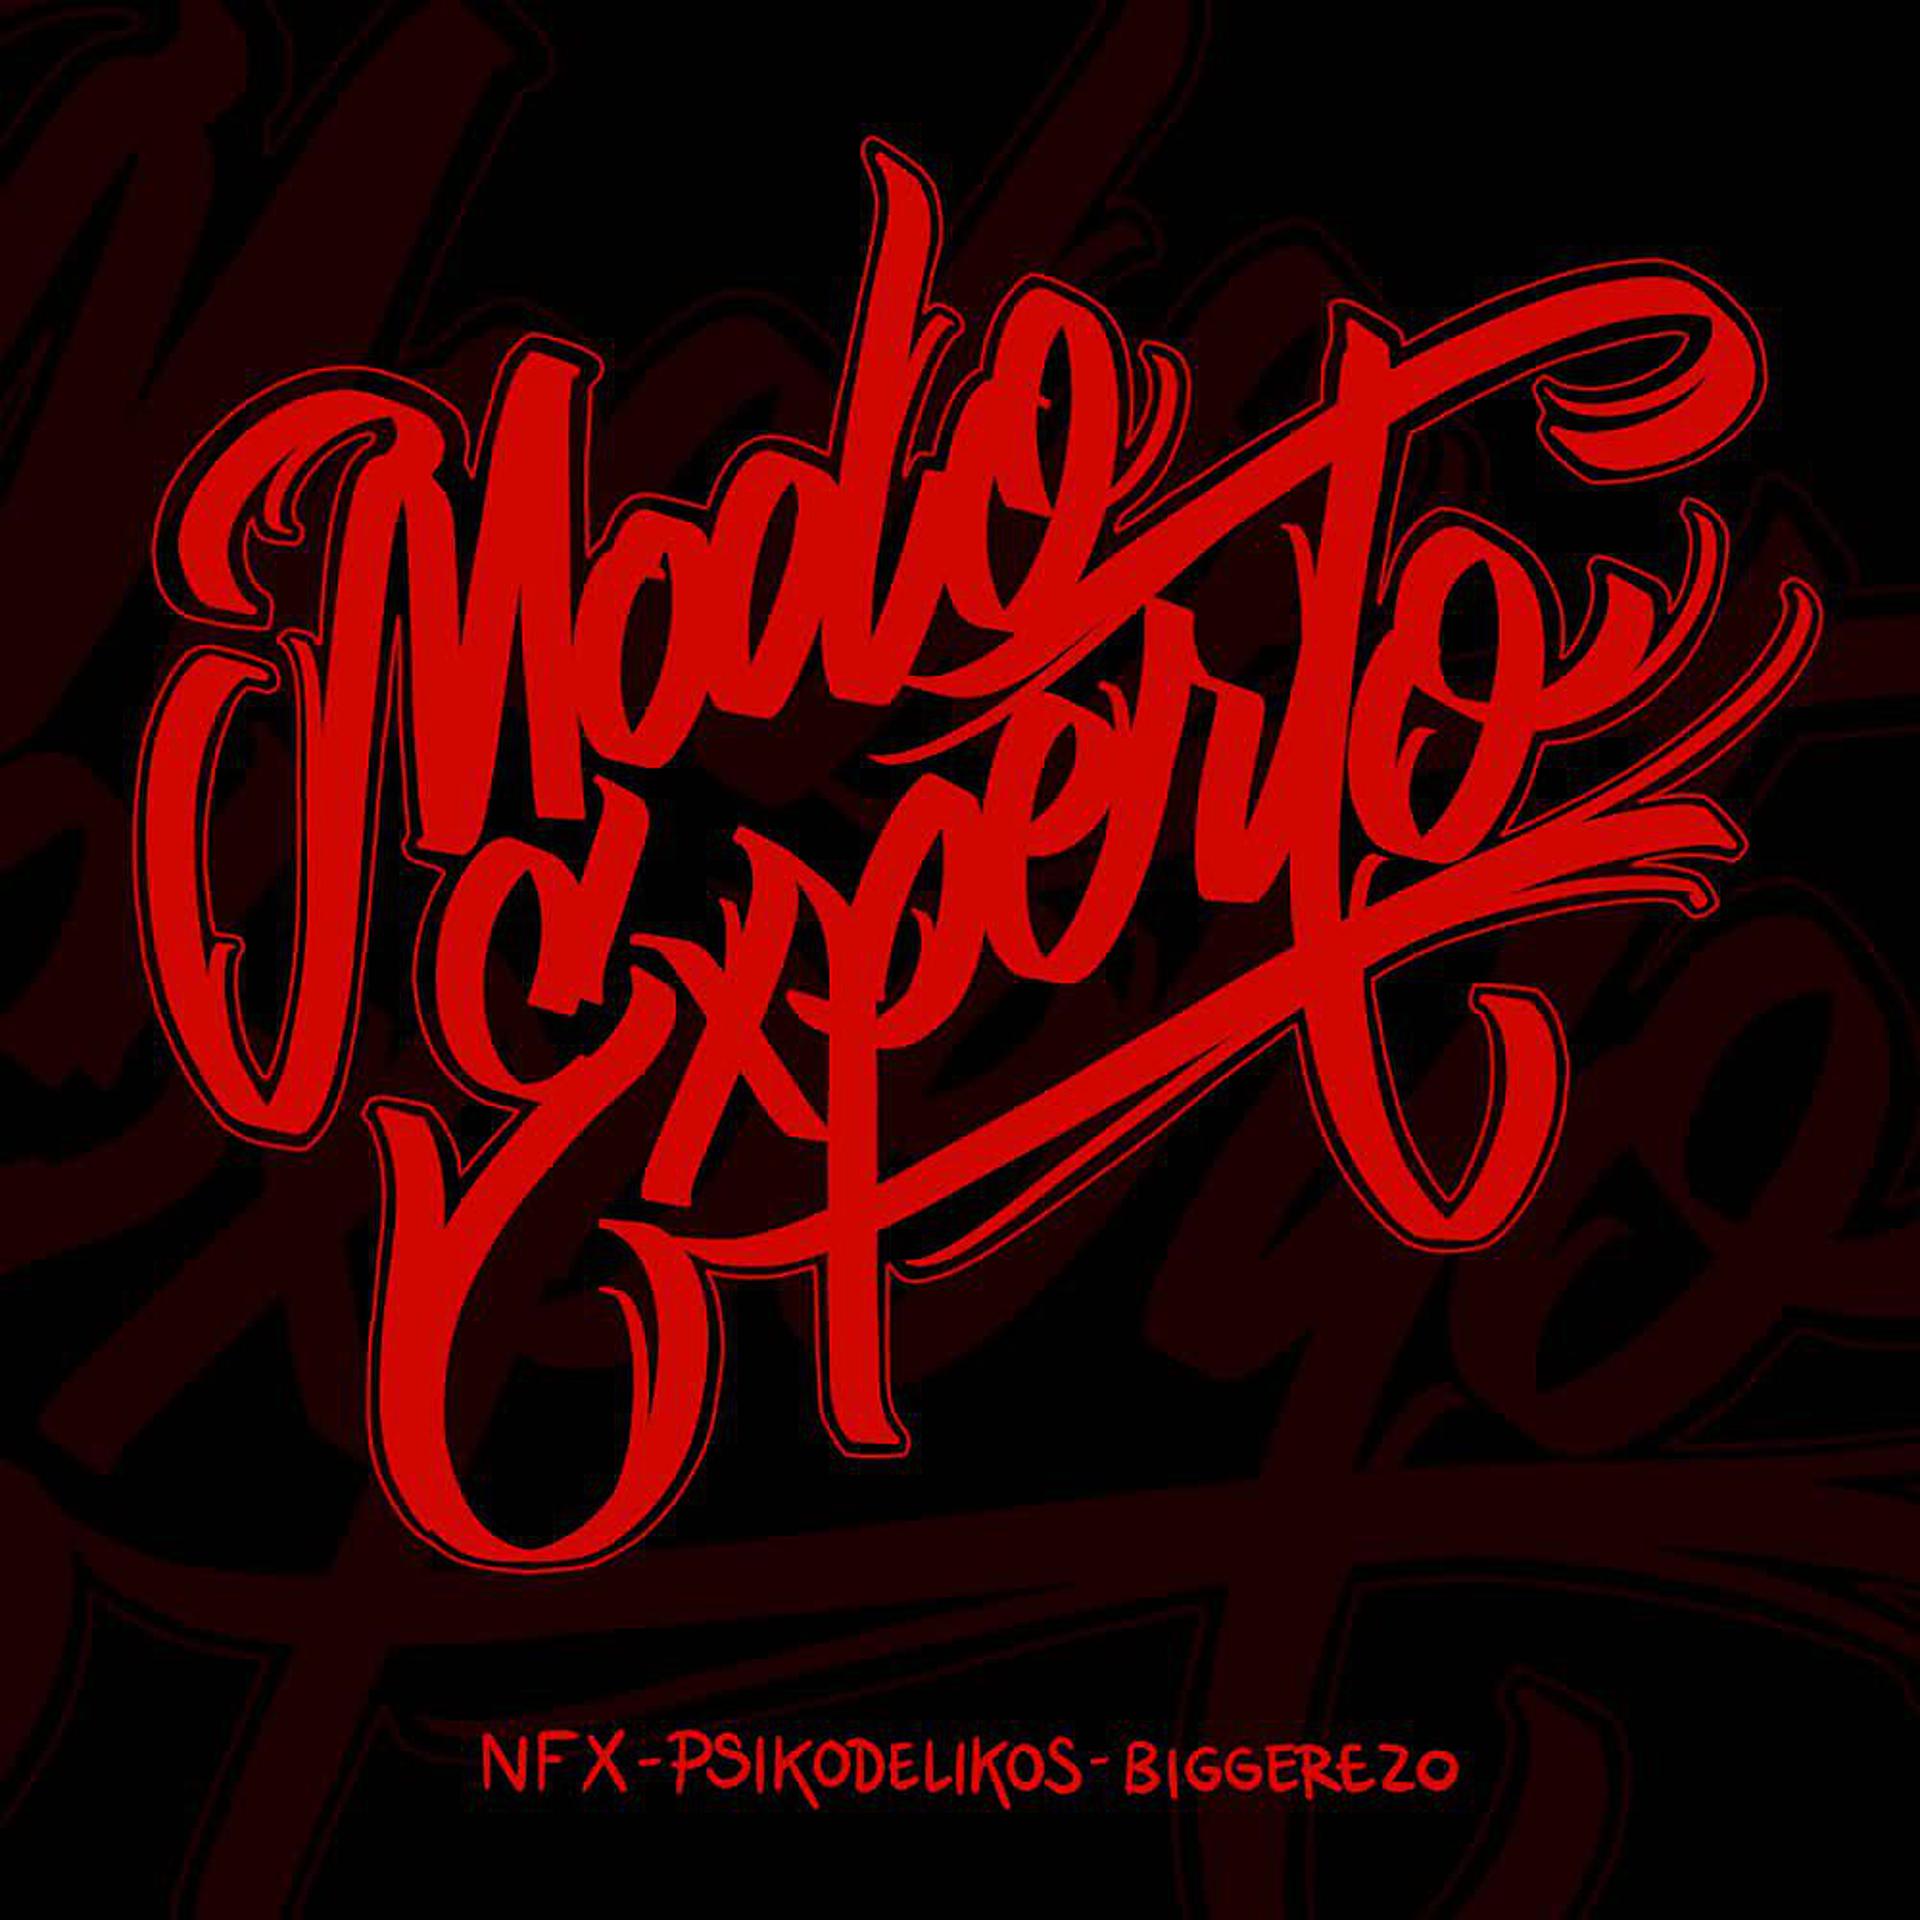 Постер альбома Modo Experto